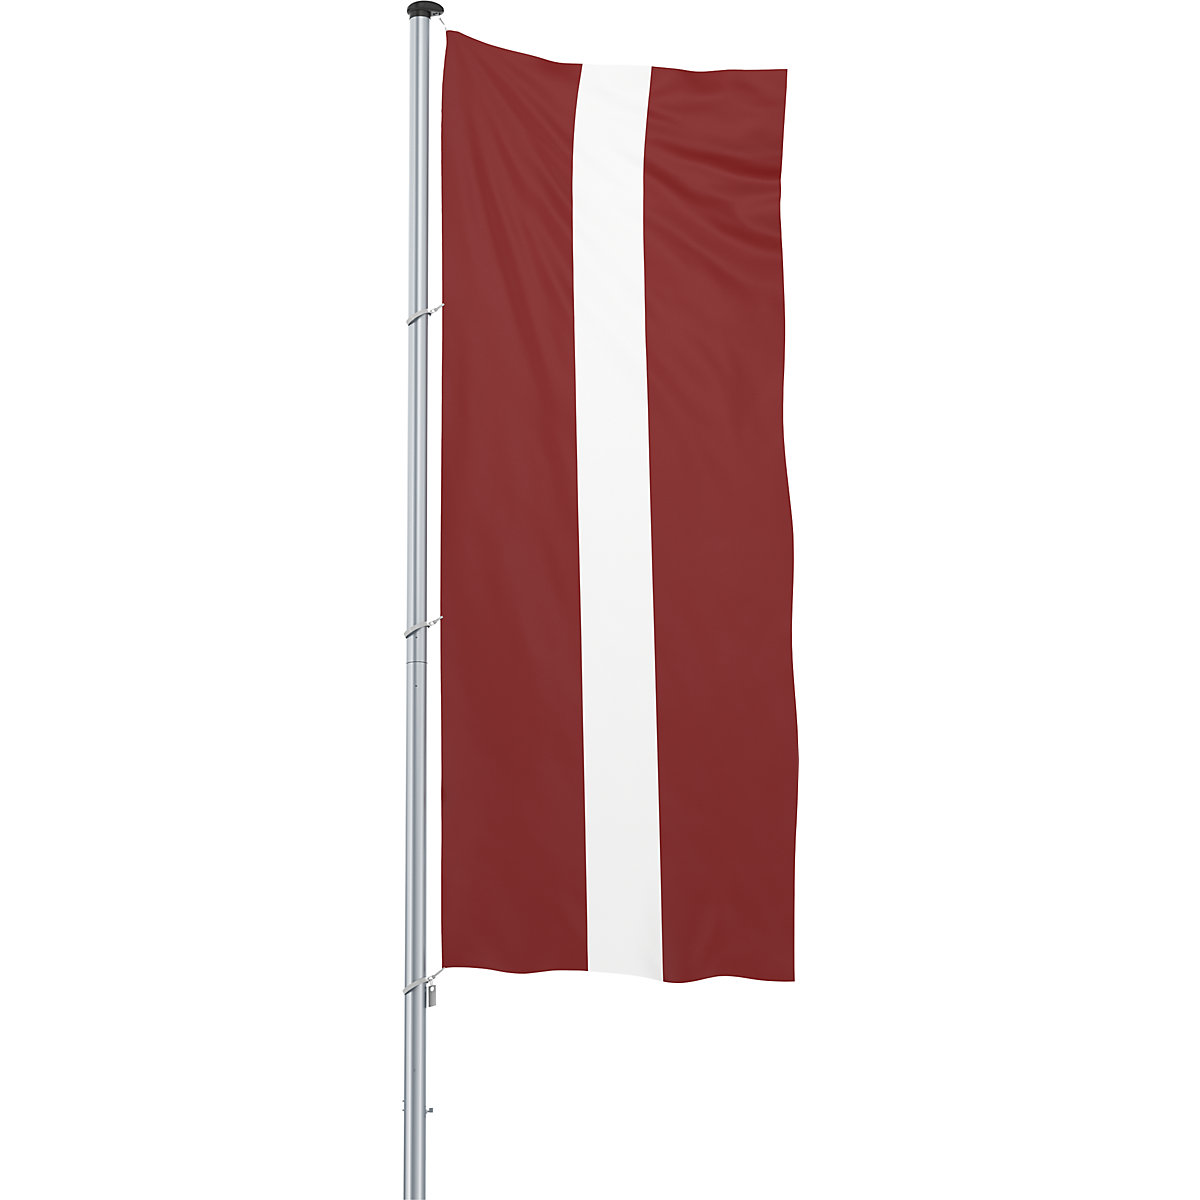 Mannus – Bandera para izar/bandera del país, formato 1,2 x 3 m, Letonia